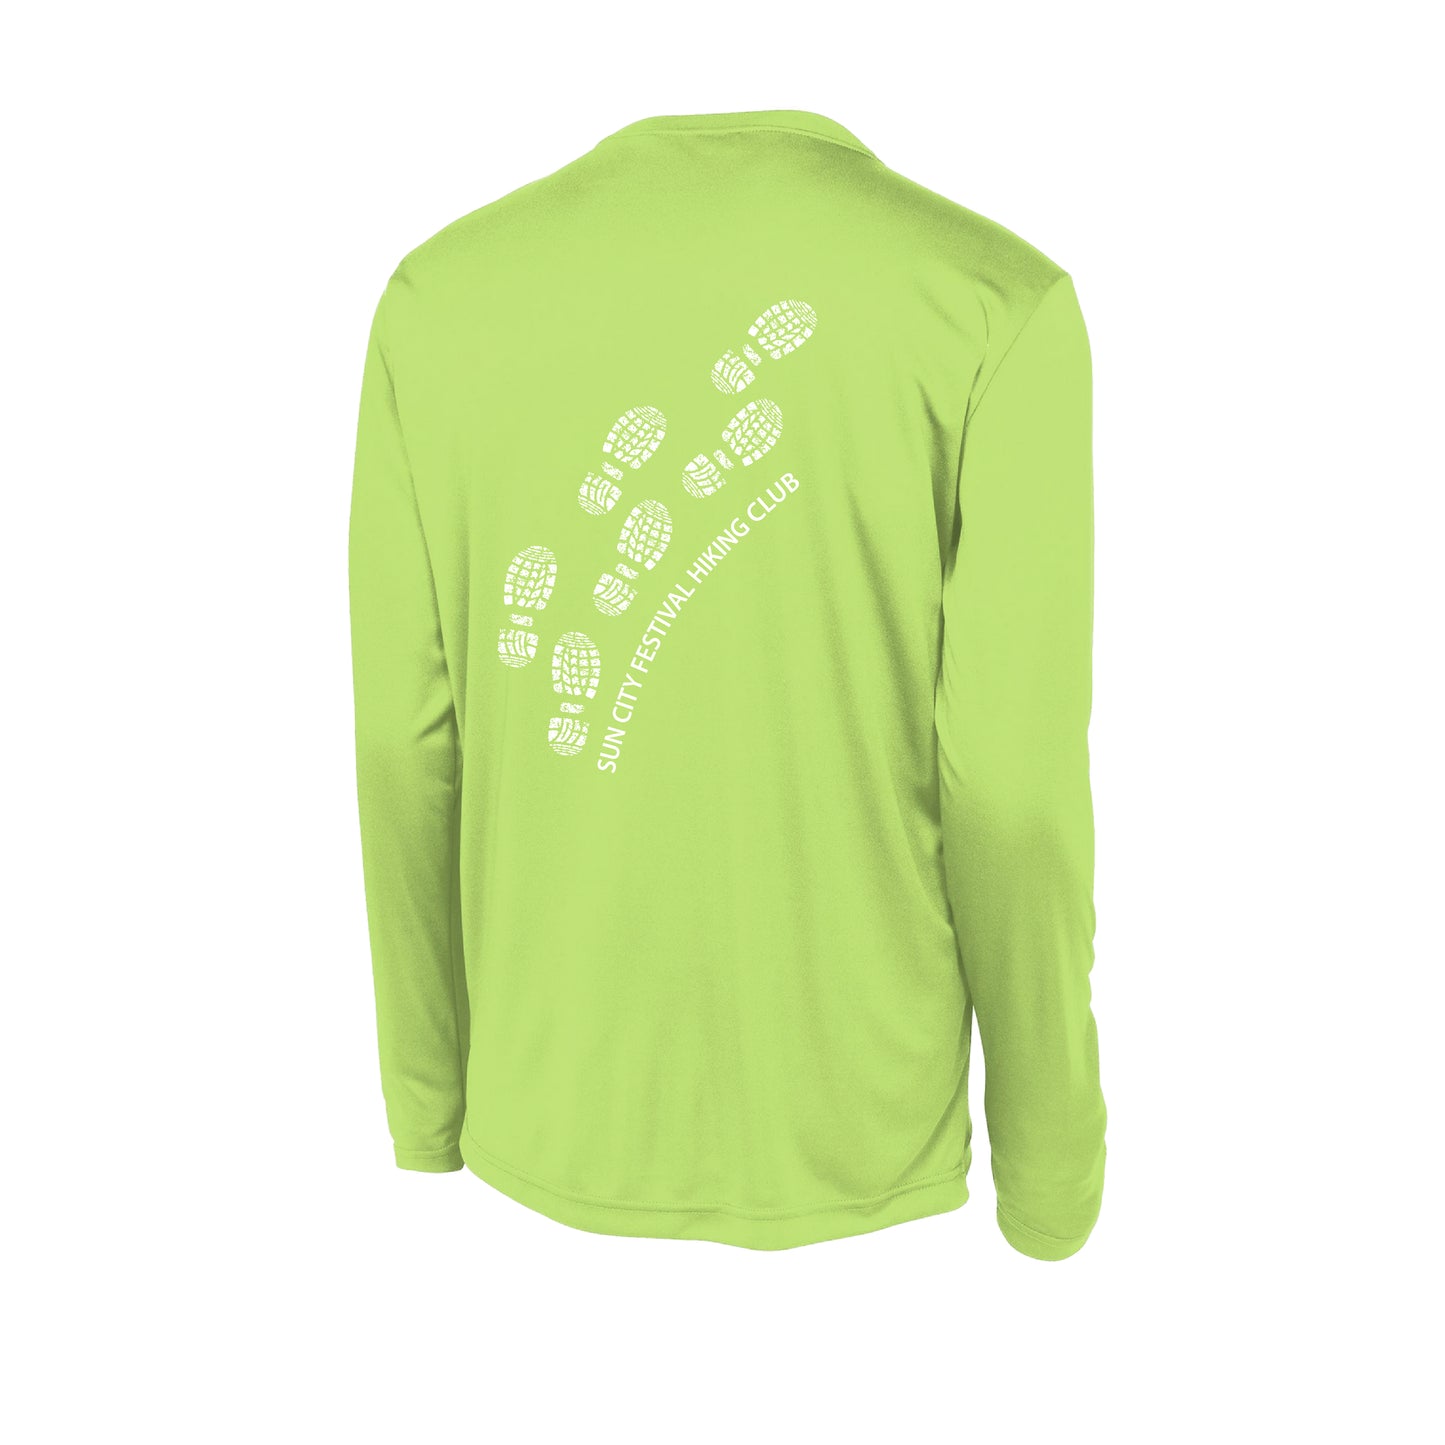 Sun City Festival Hiking Club | Men's Long Sleeve Athletic Shirt | 100% Polyester